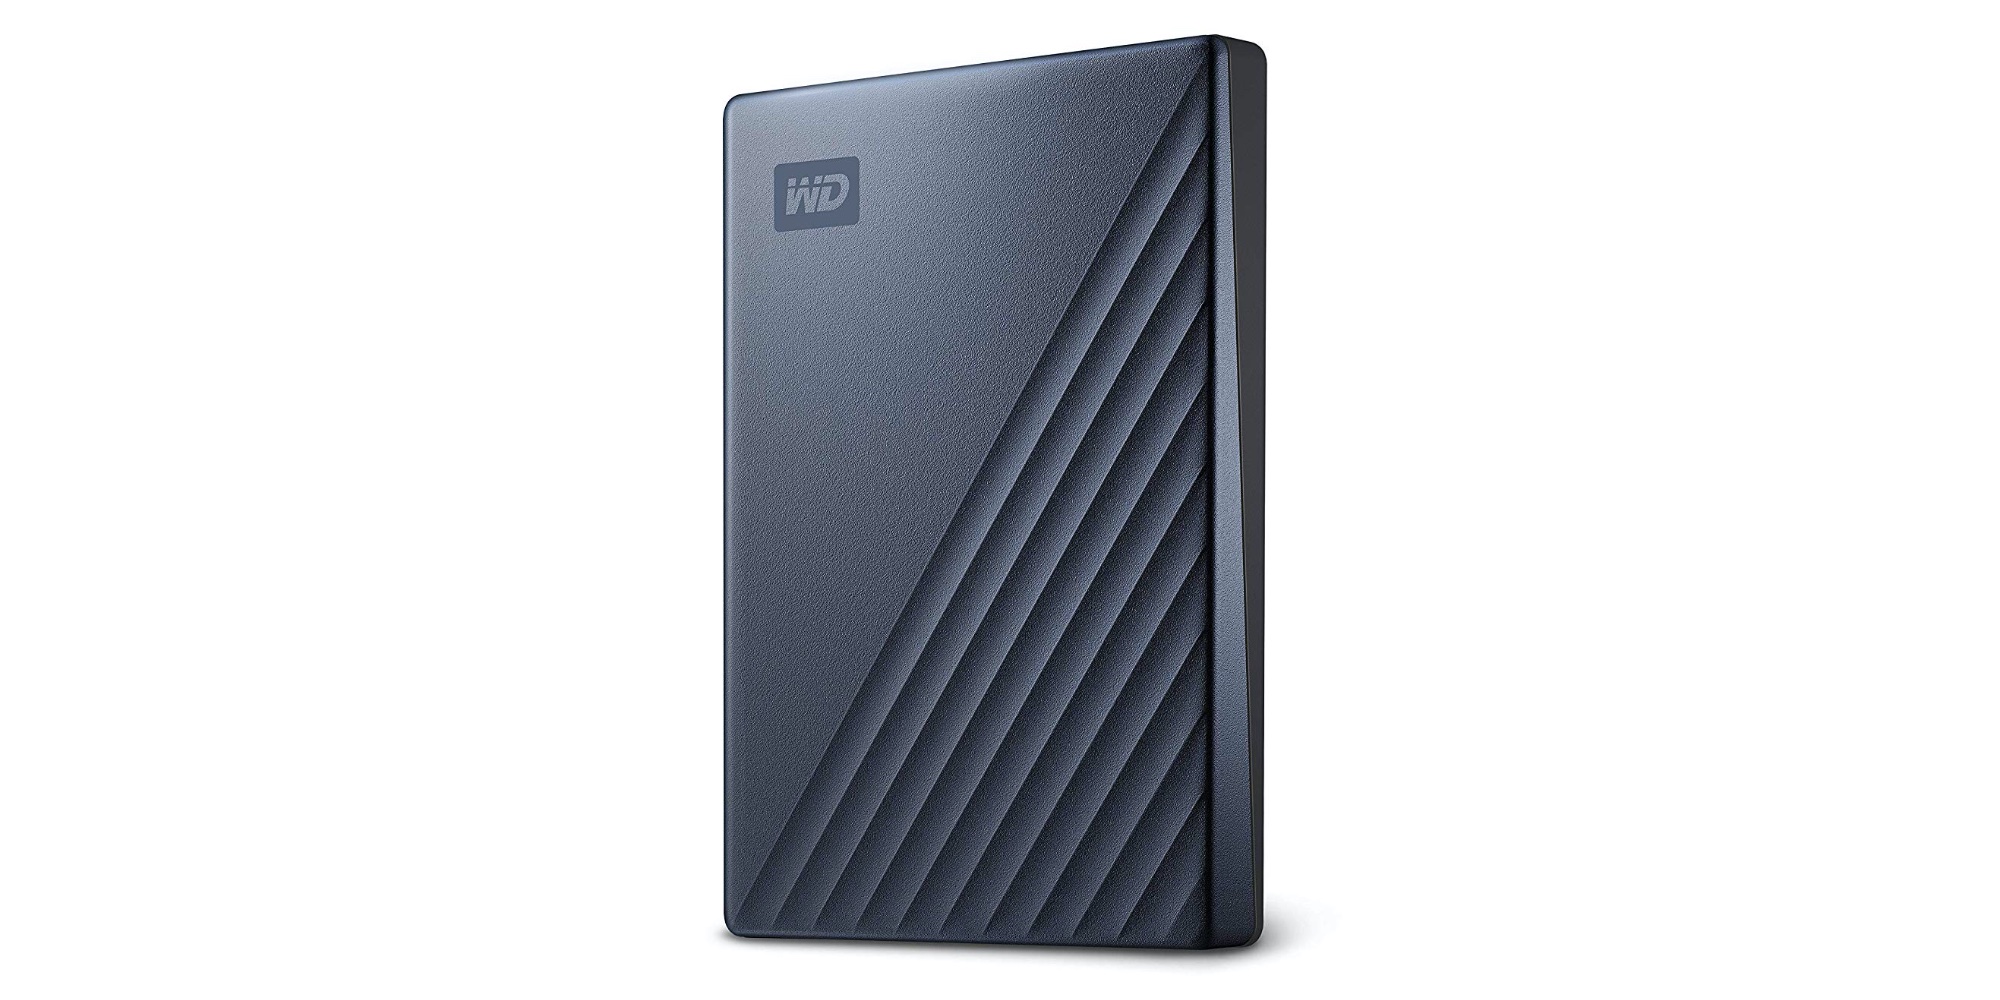 wd hard drives for mac